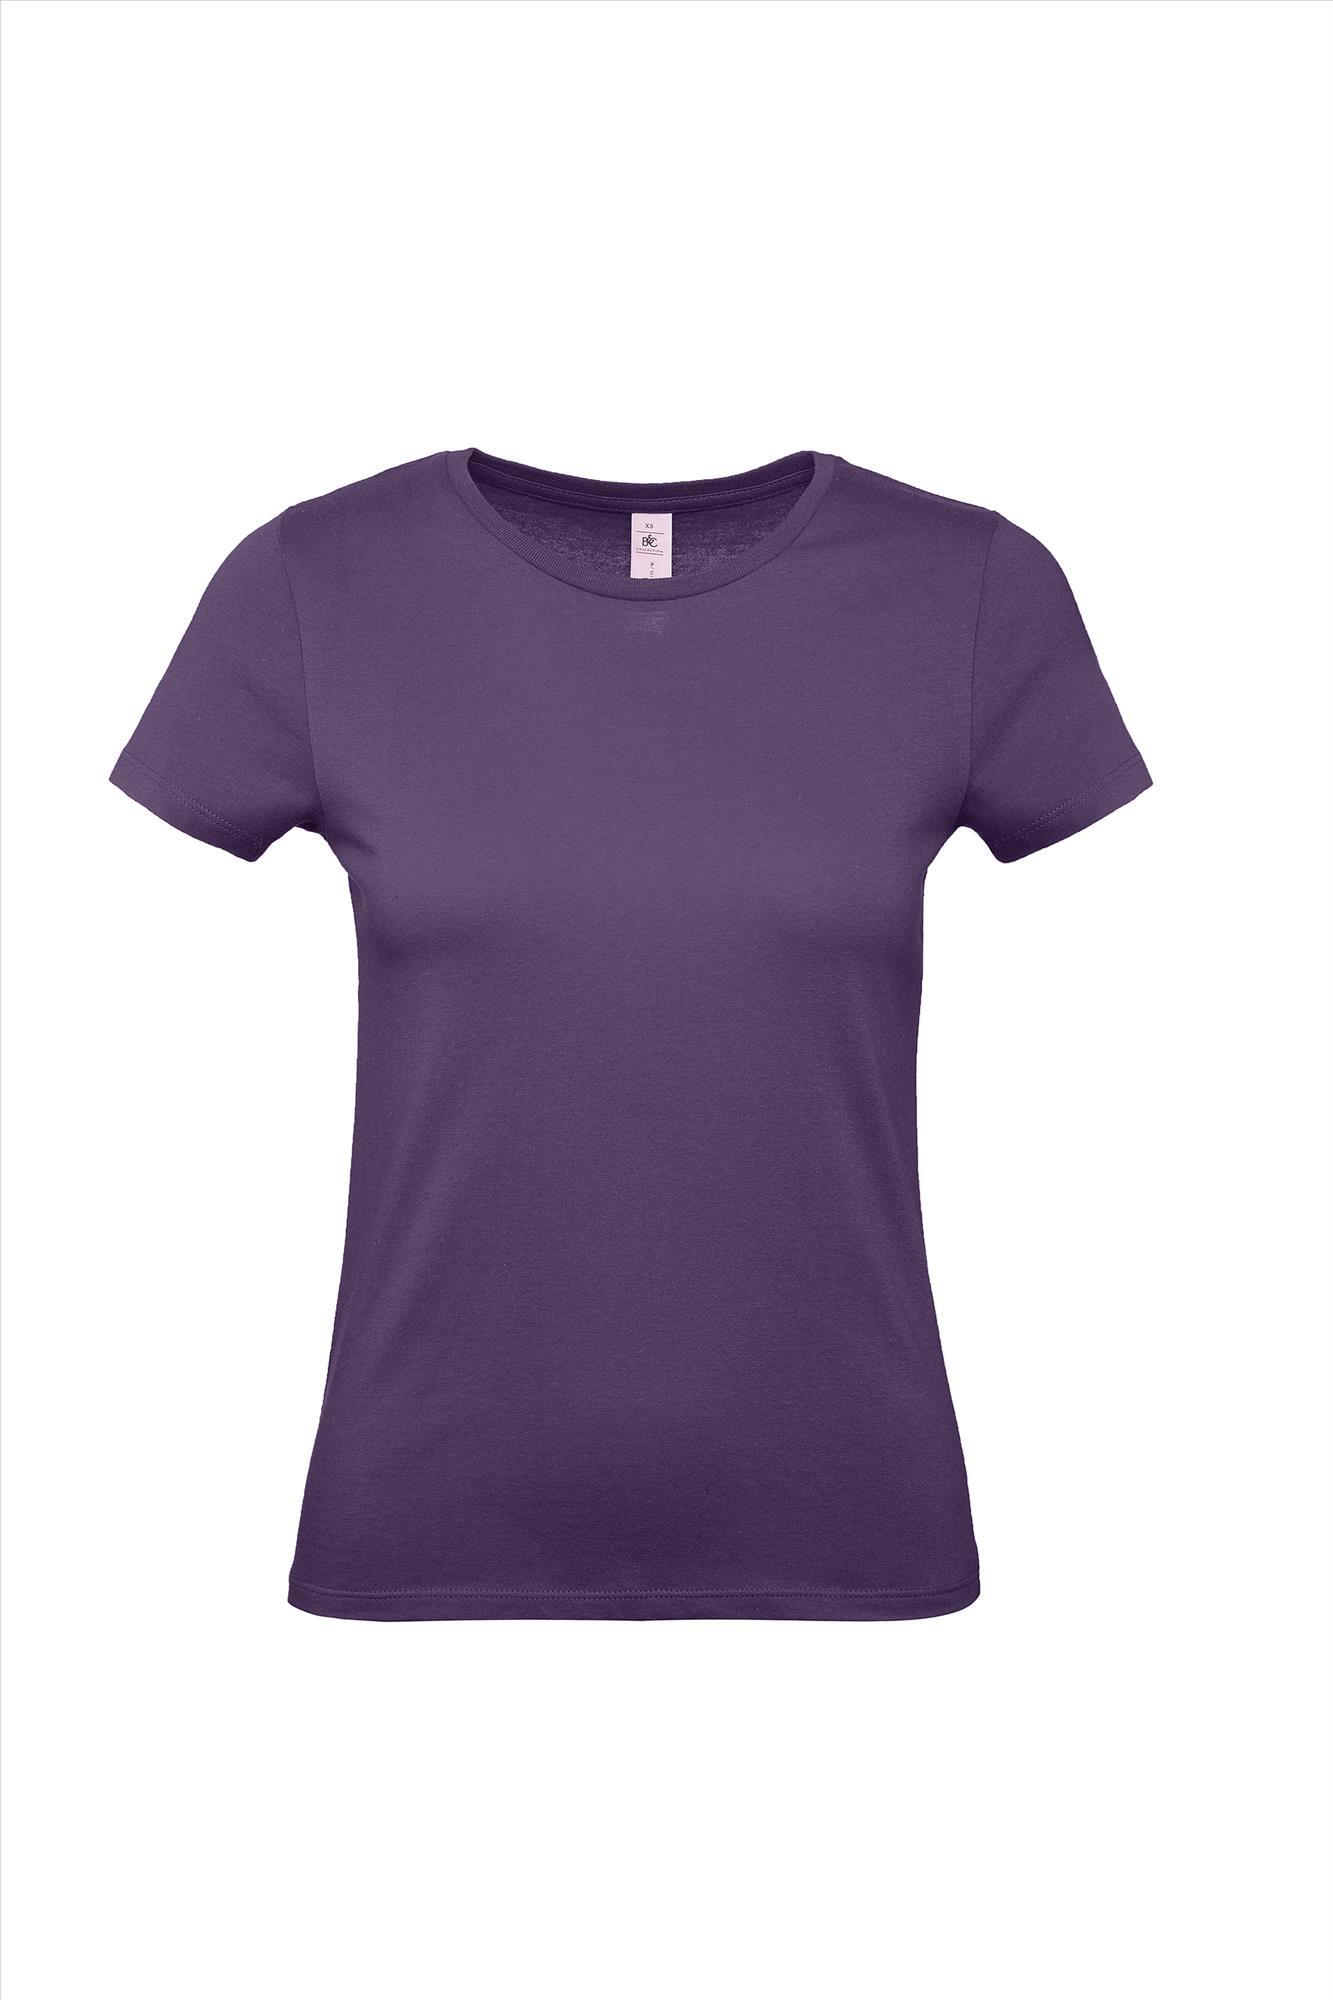 Modern T-shirt voor haar dames shirt straalpaars